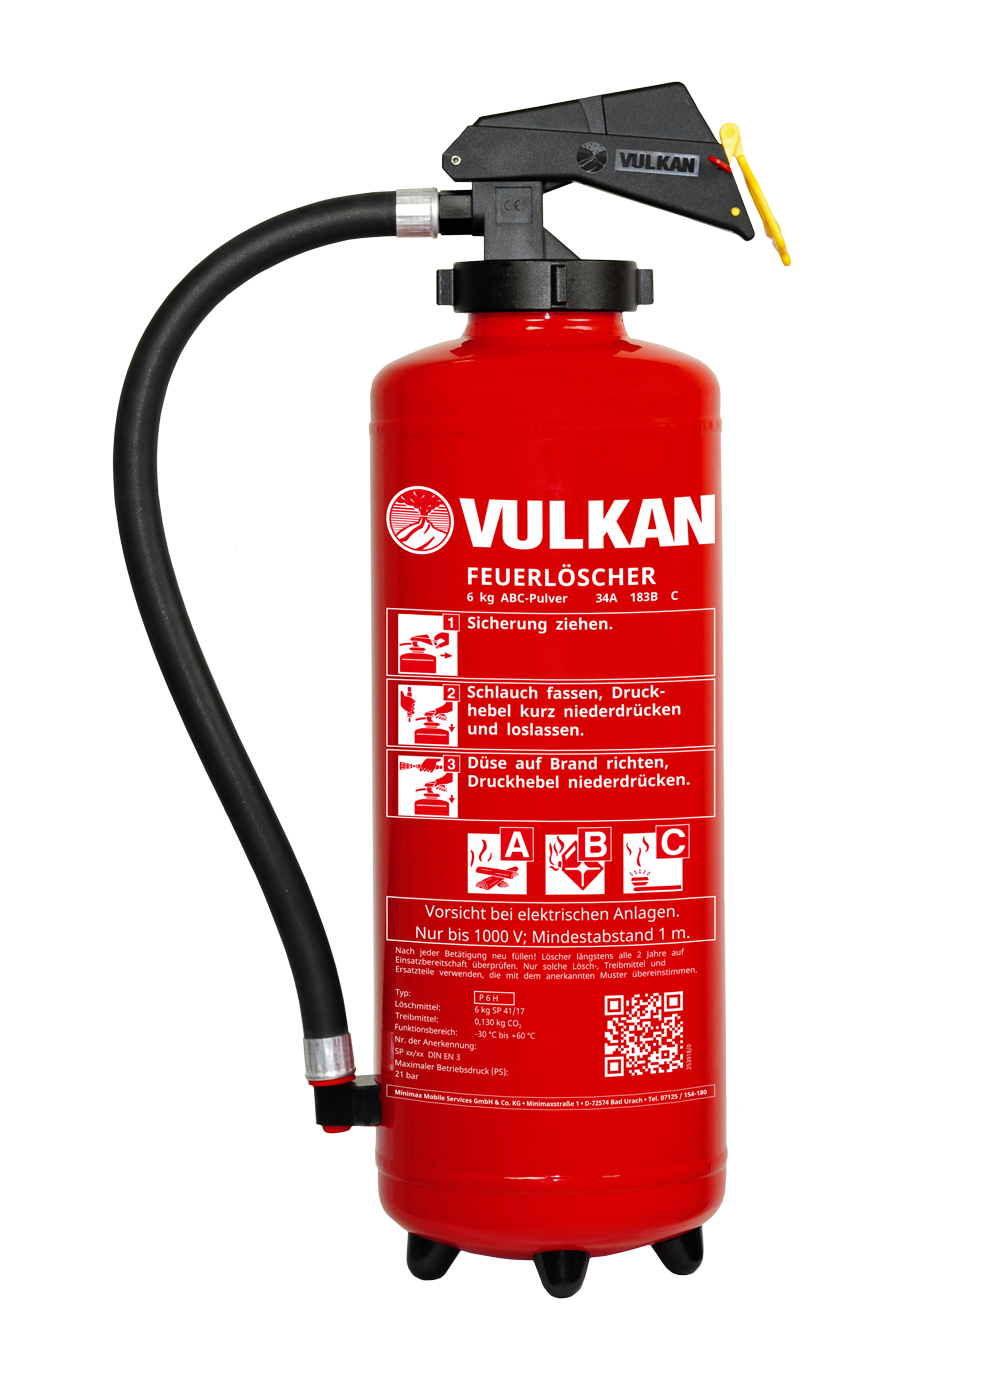 Premium Feuerlöscher der Marke Vulkan